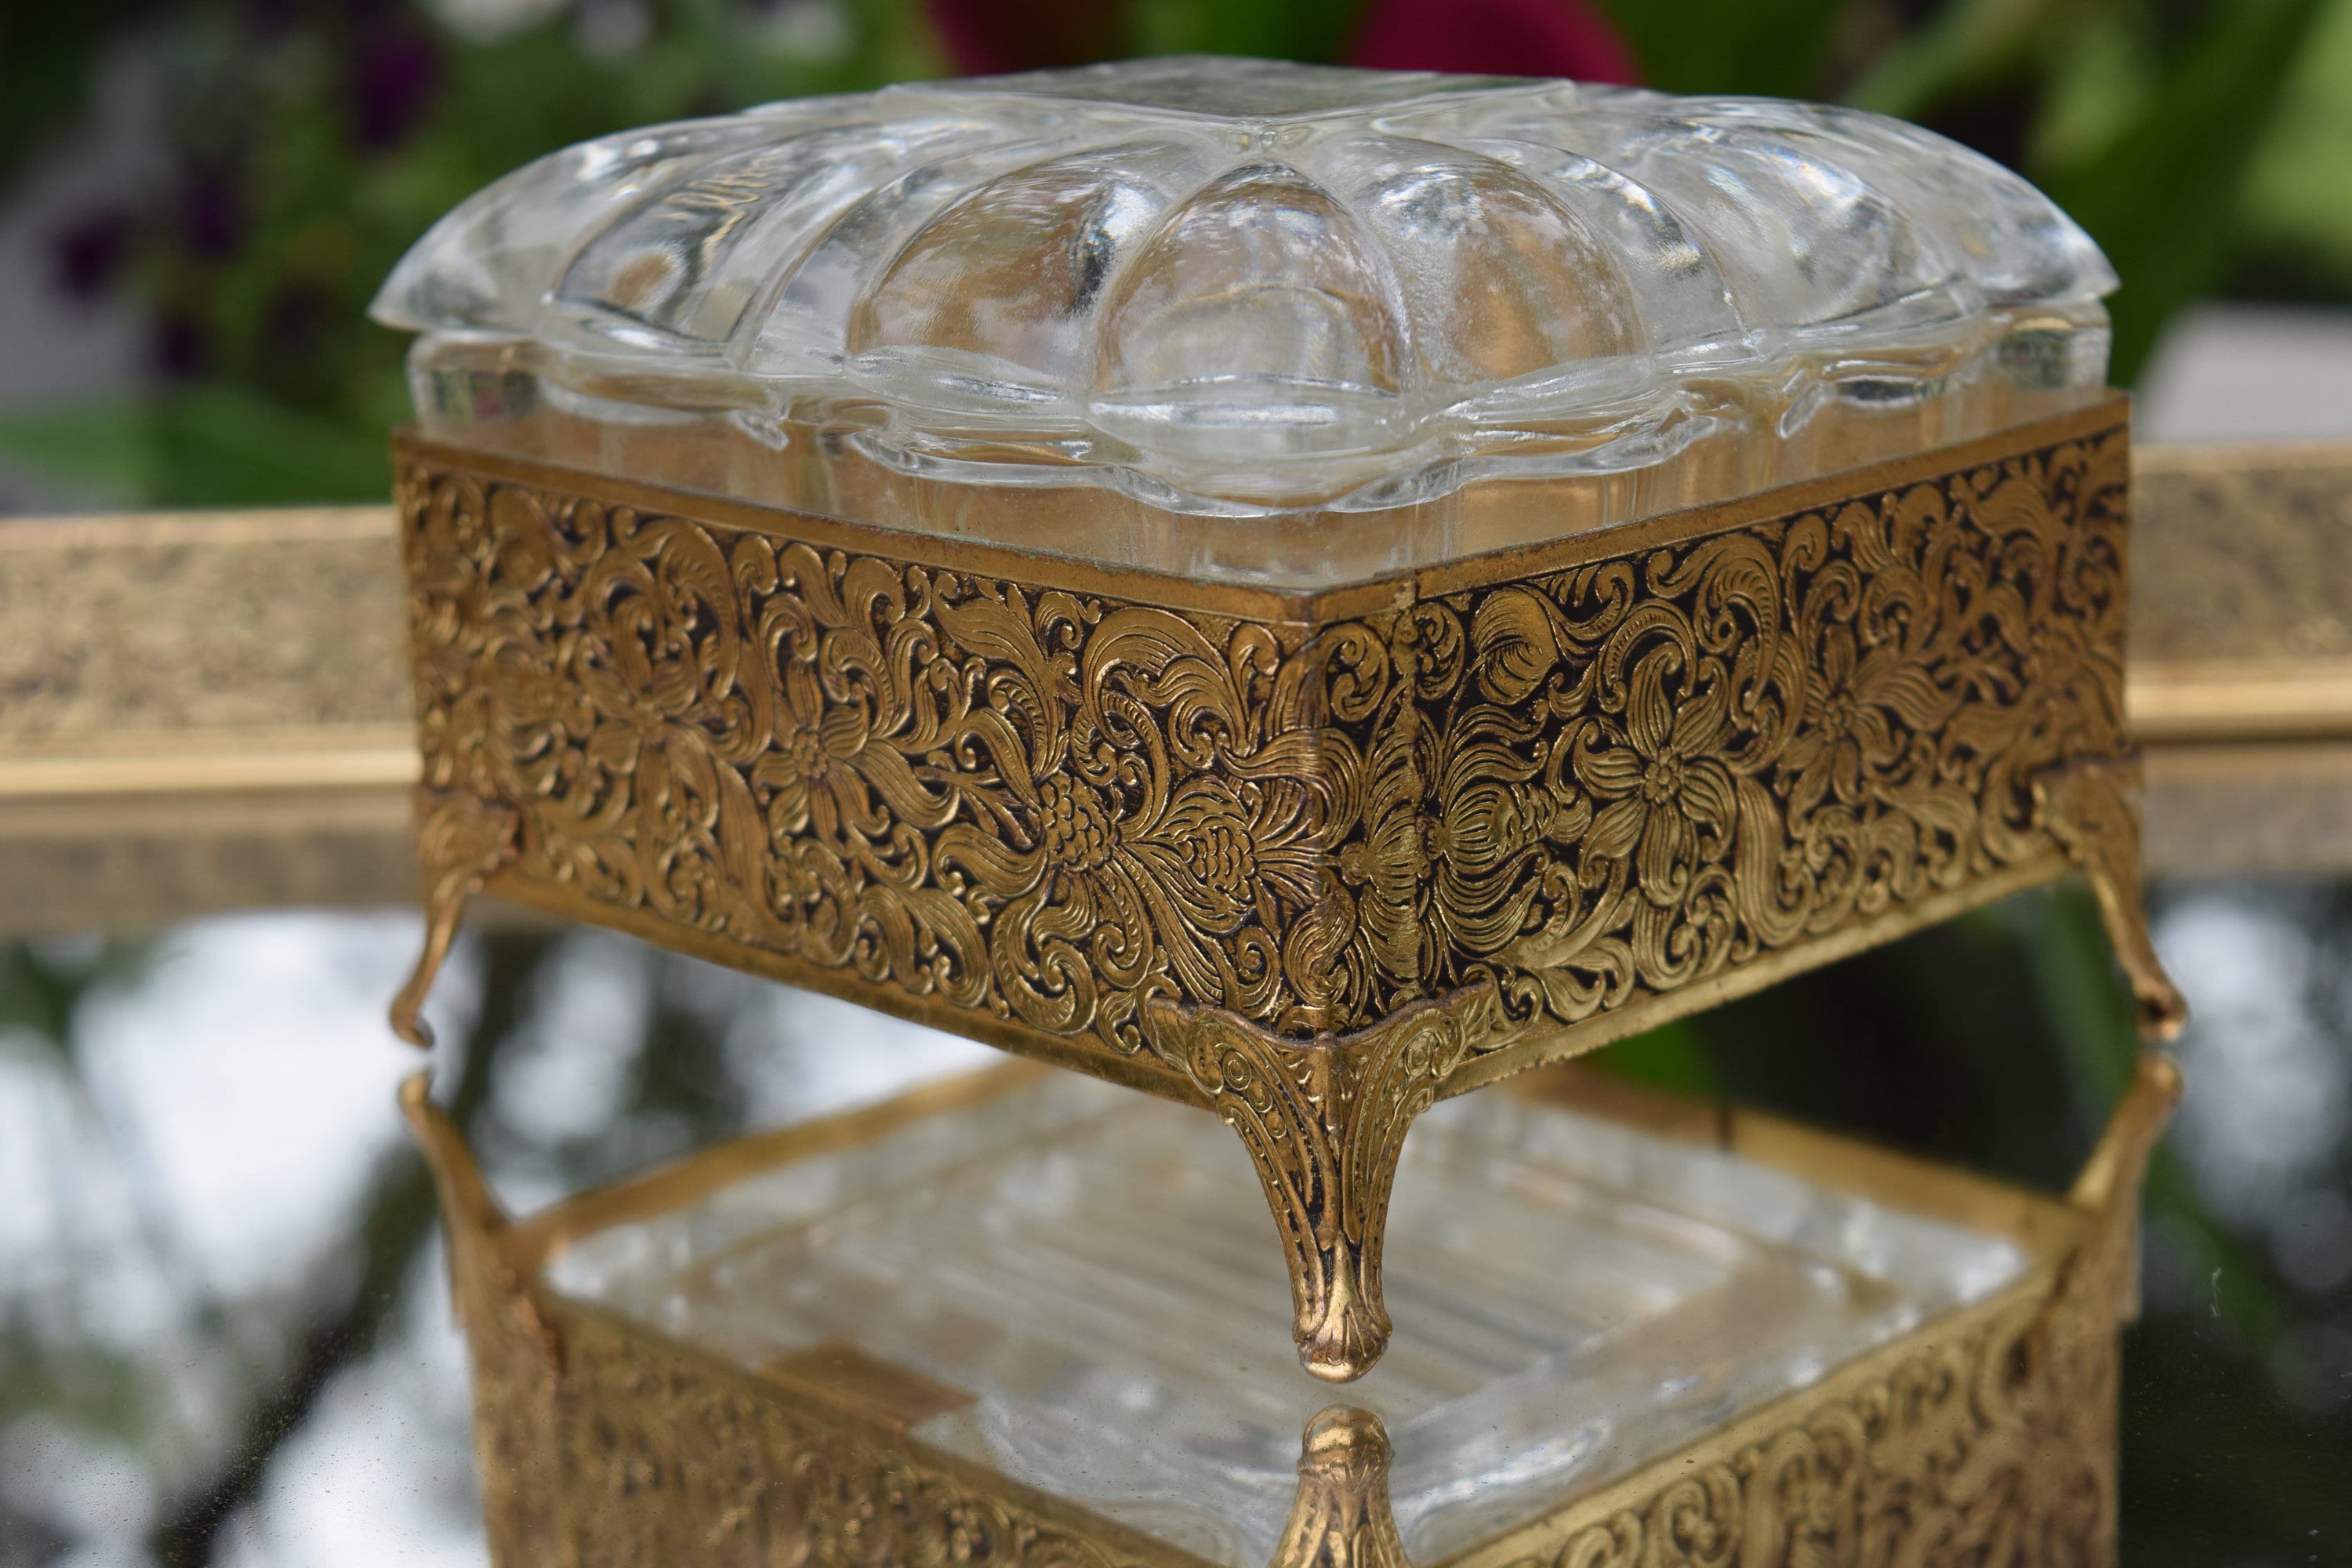 Vintage Gold ~ Brass Glass Jewelry Box, 1950's Brass Floral Jewelry Box  with Glass Top and Glass Interior, Vintage Jewelry storage